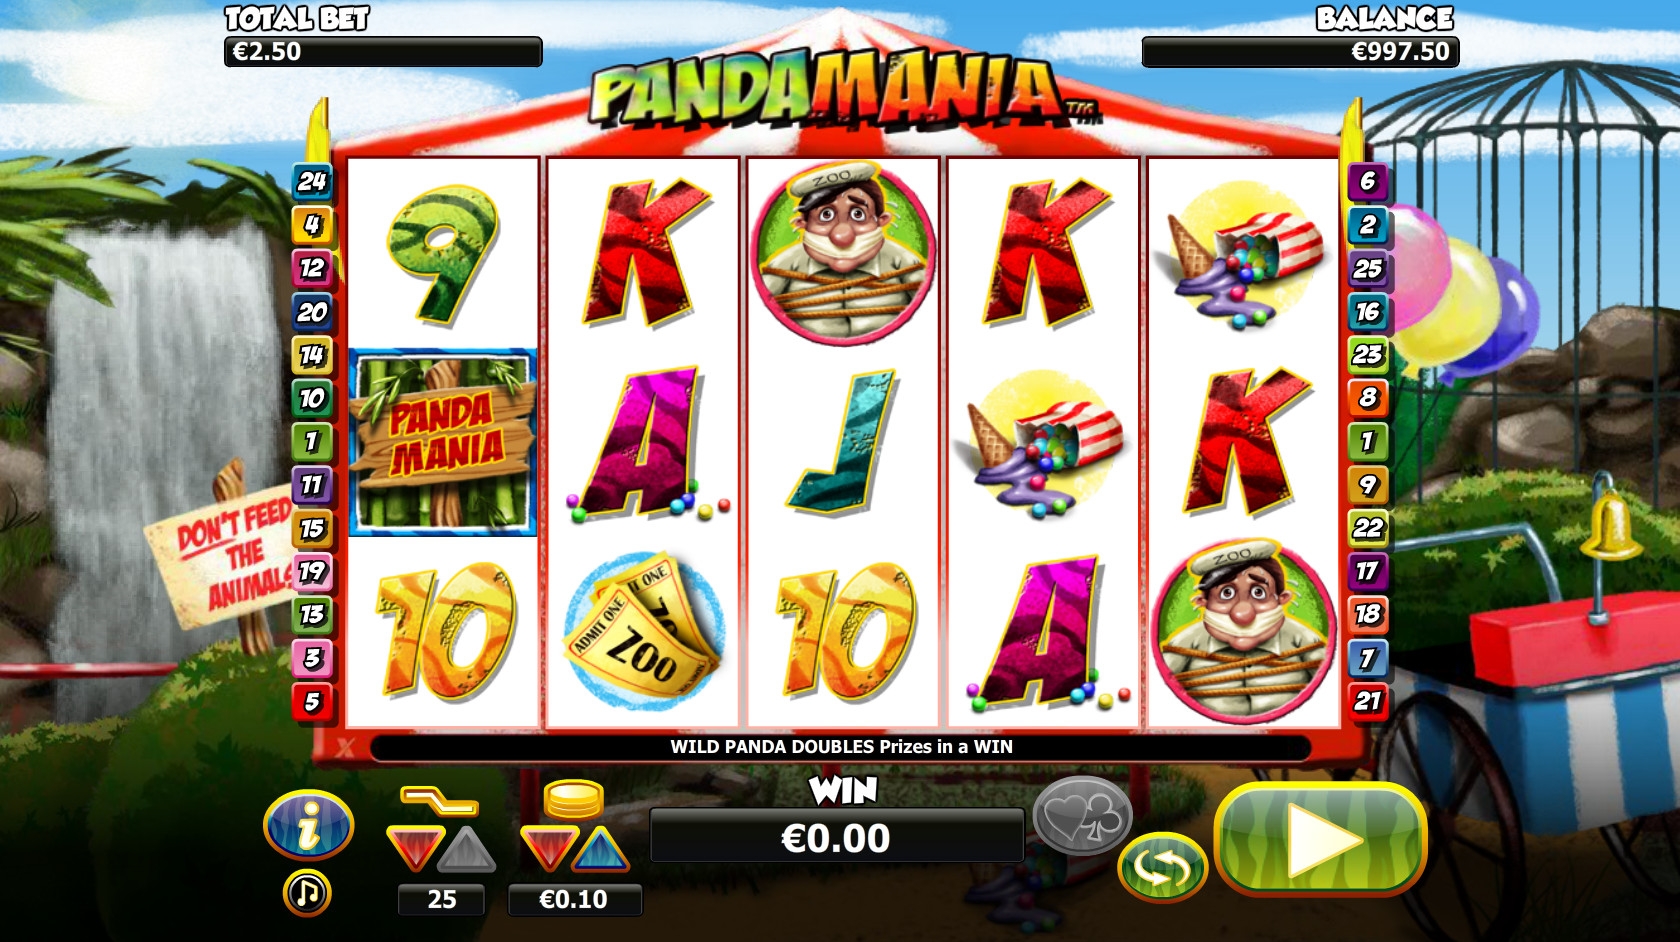 Panda Mania (Panda Mania) from category Slots